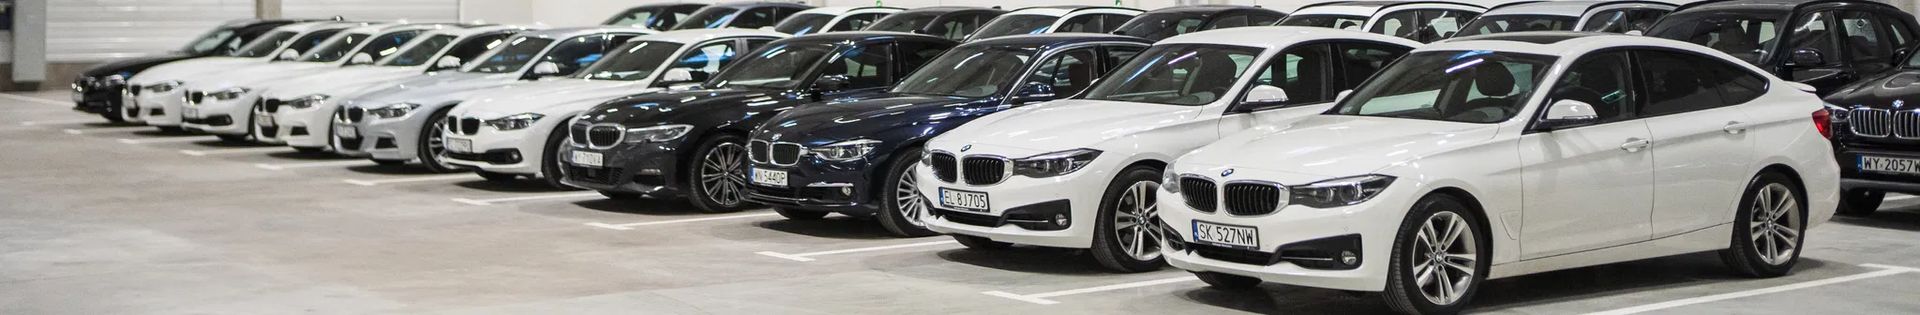 Inchcape Park - Dealer BMW Premium Selection top banner